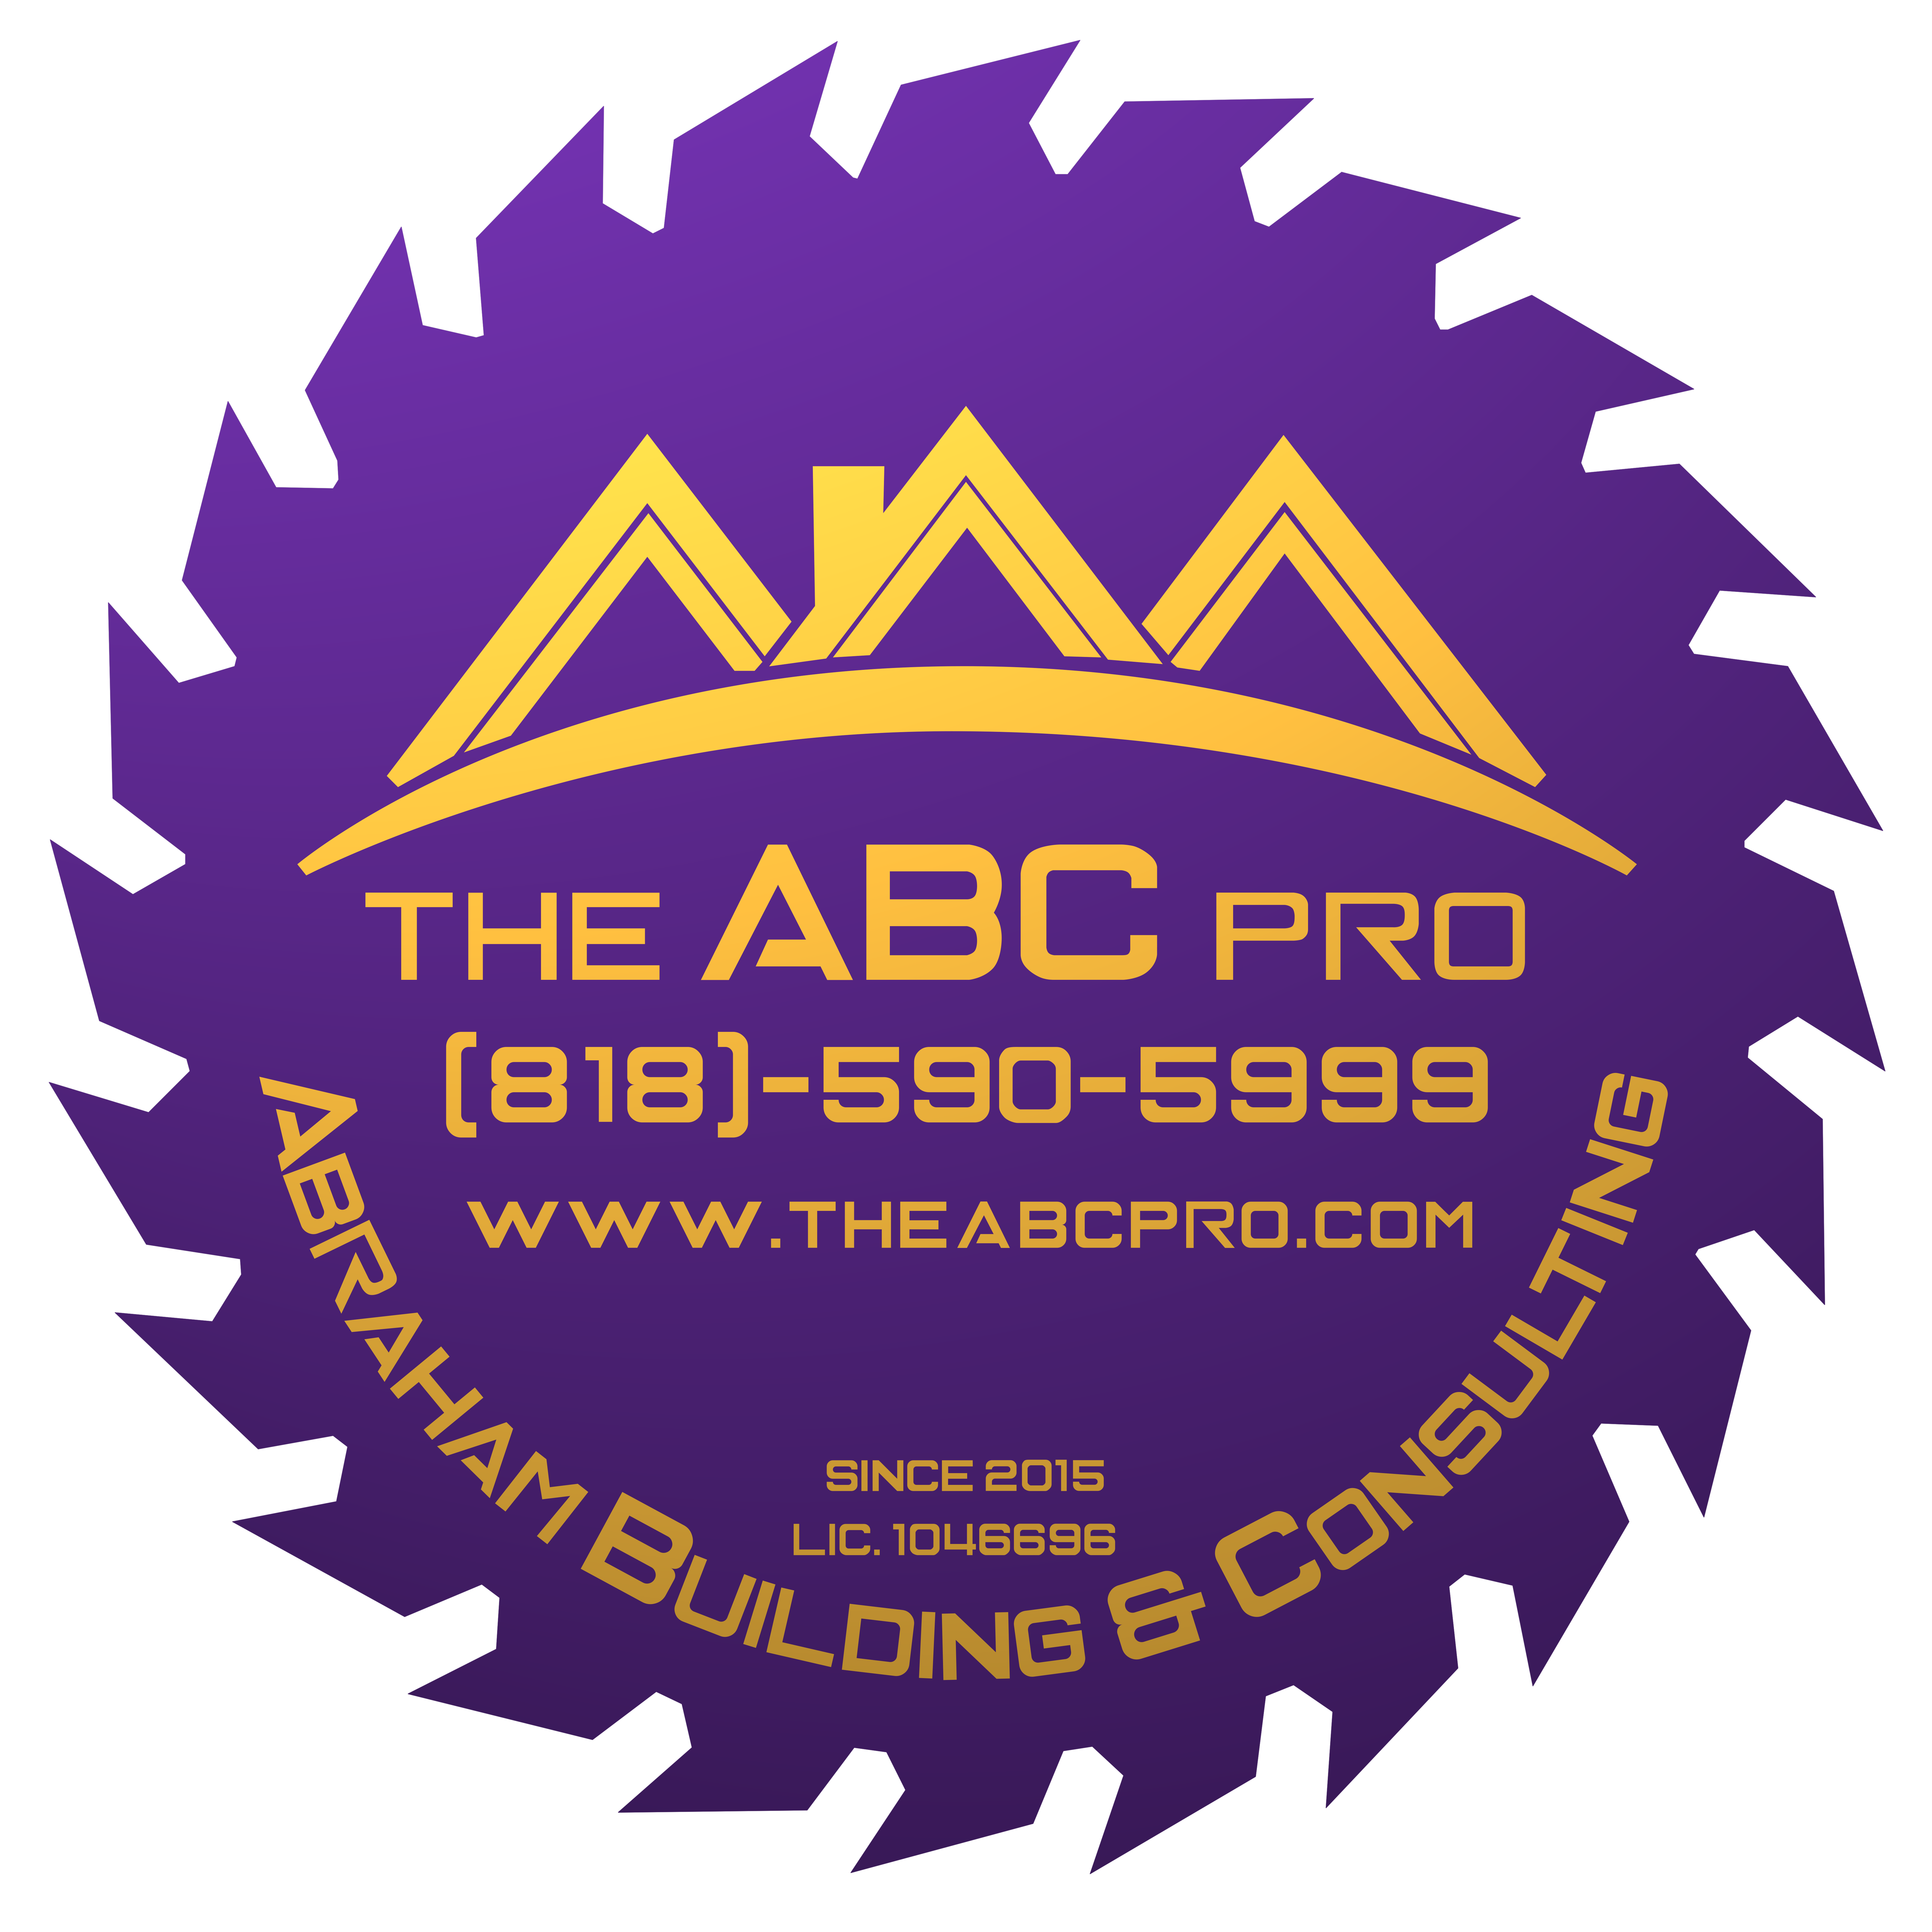 Abraham Building & Consulting, Inc. Logo